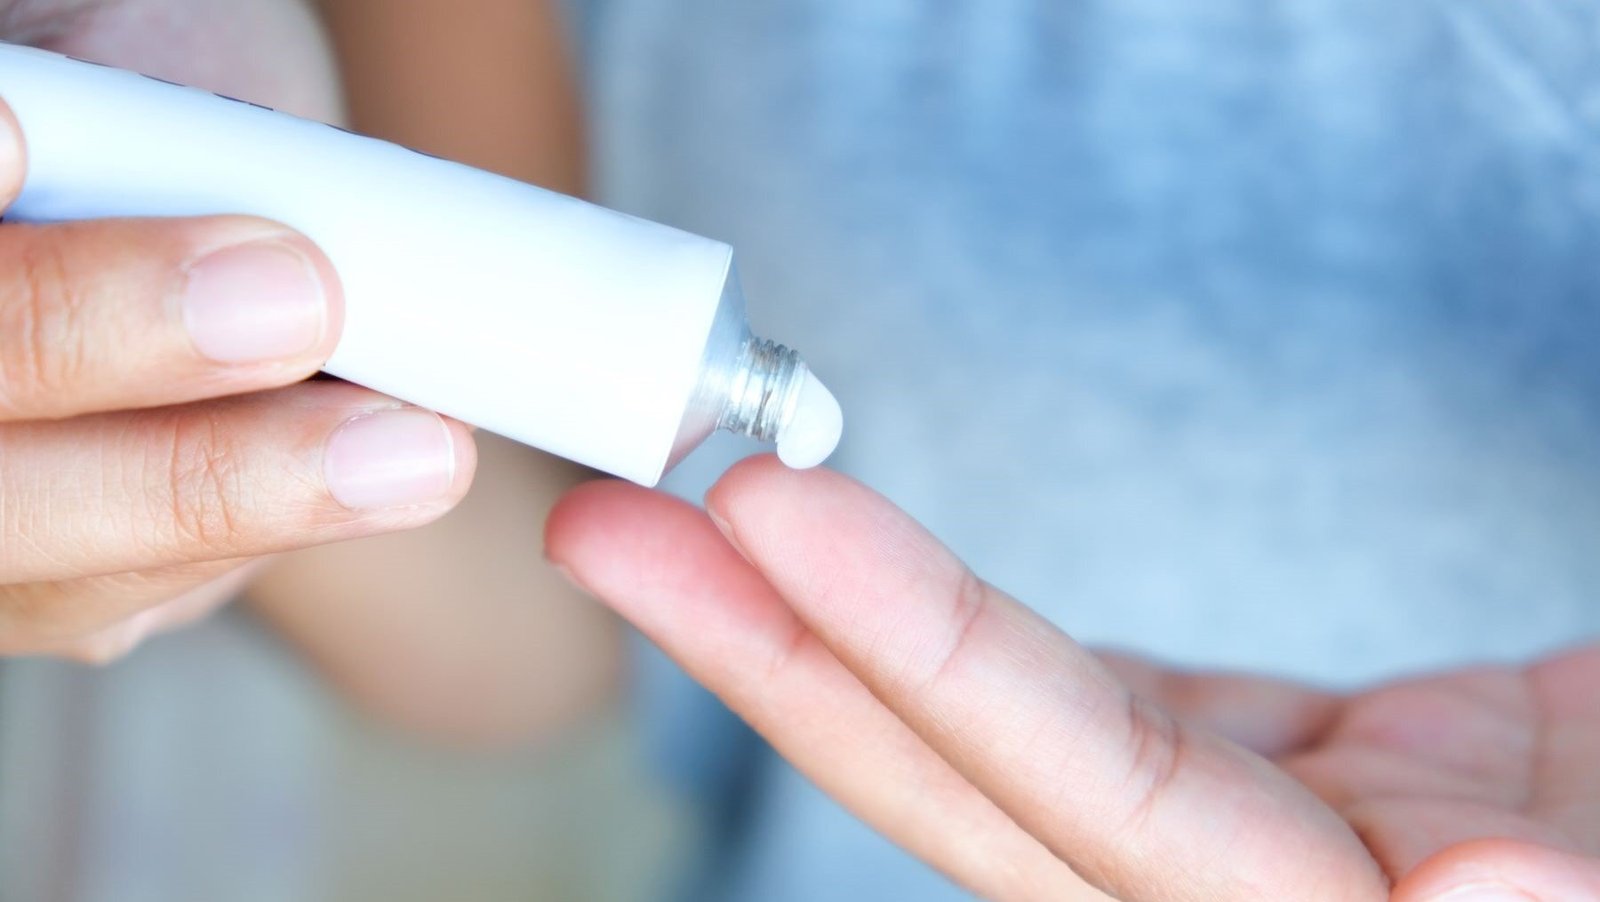 Study finds 15 percent ruxolitinib cream safe effective for teens with eczema